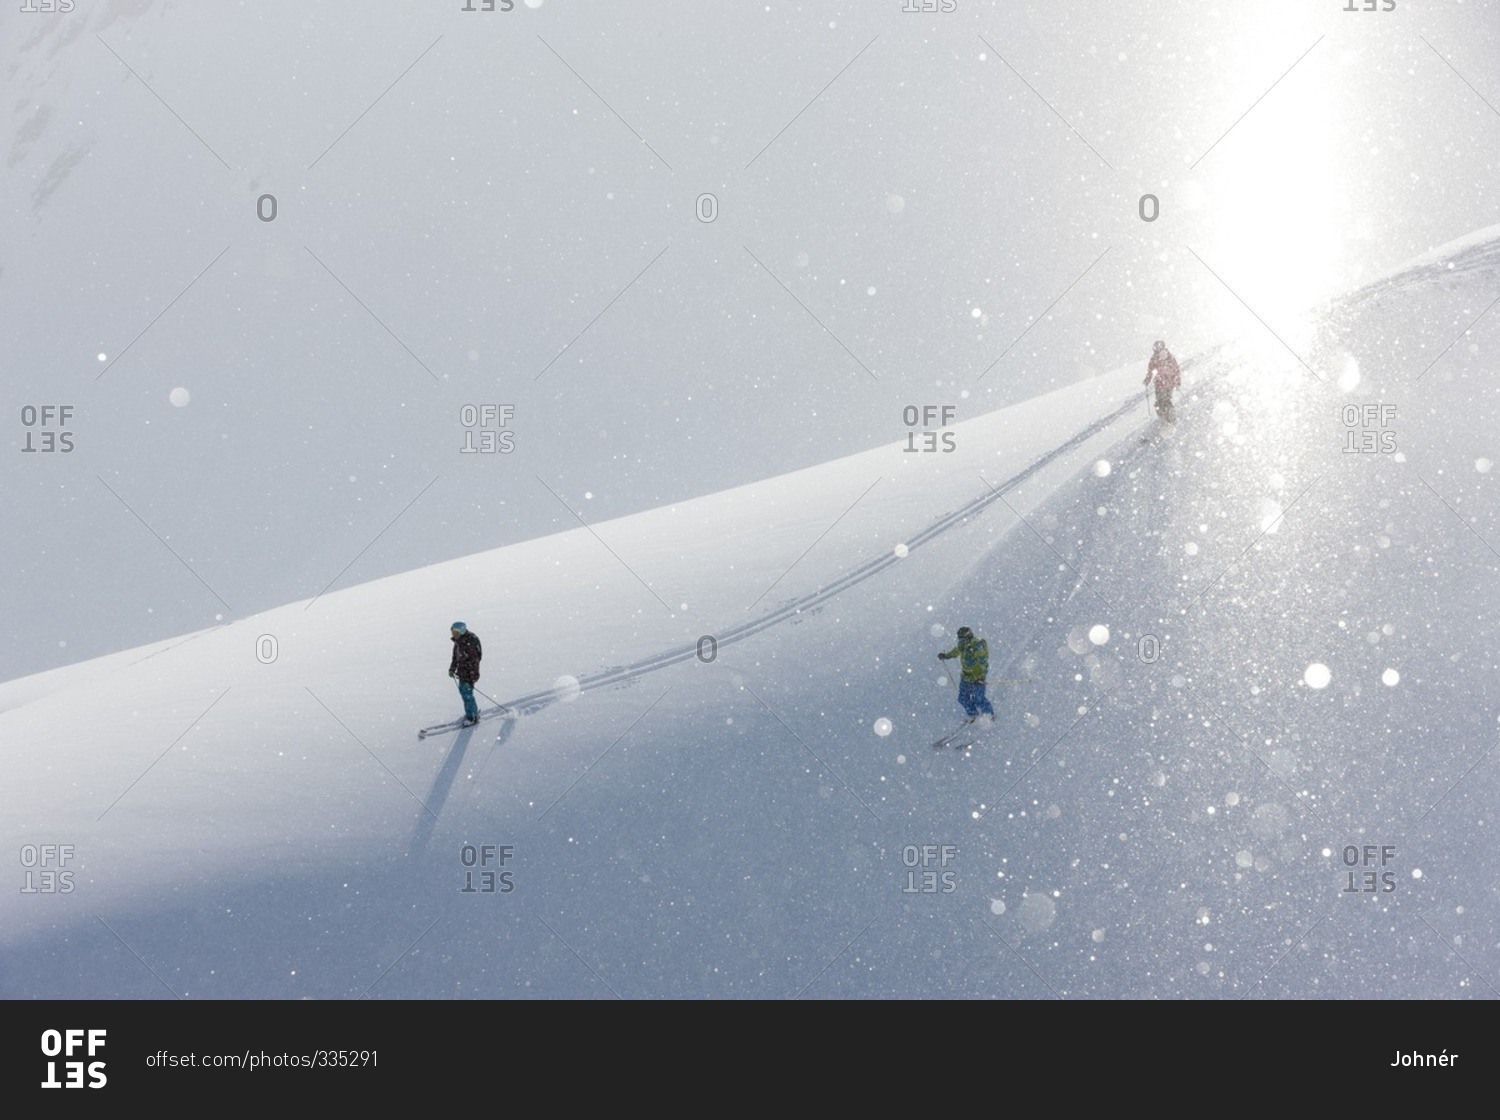 People skiing